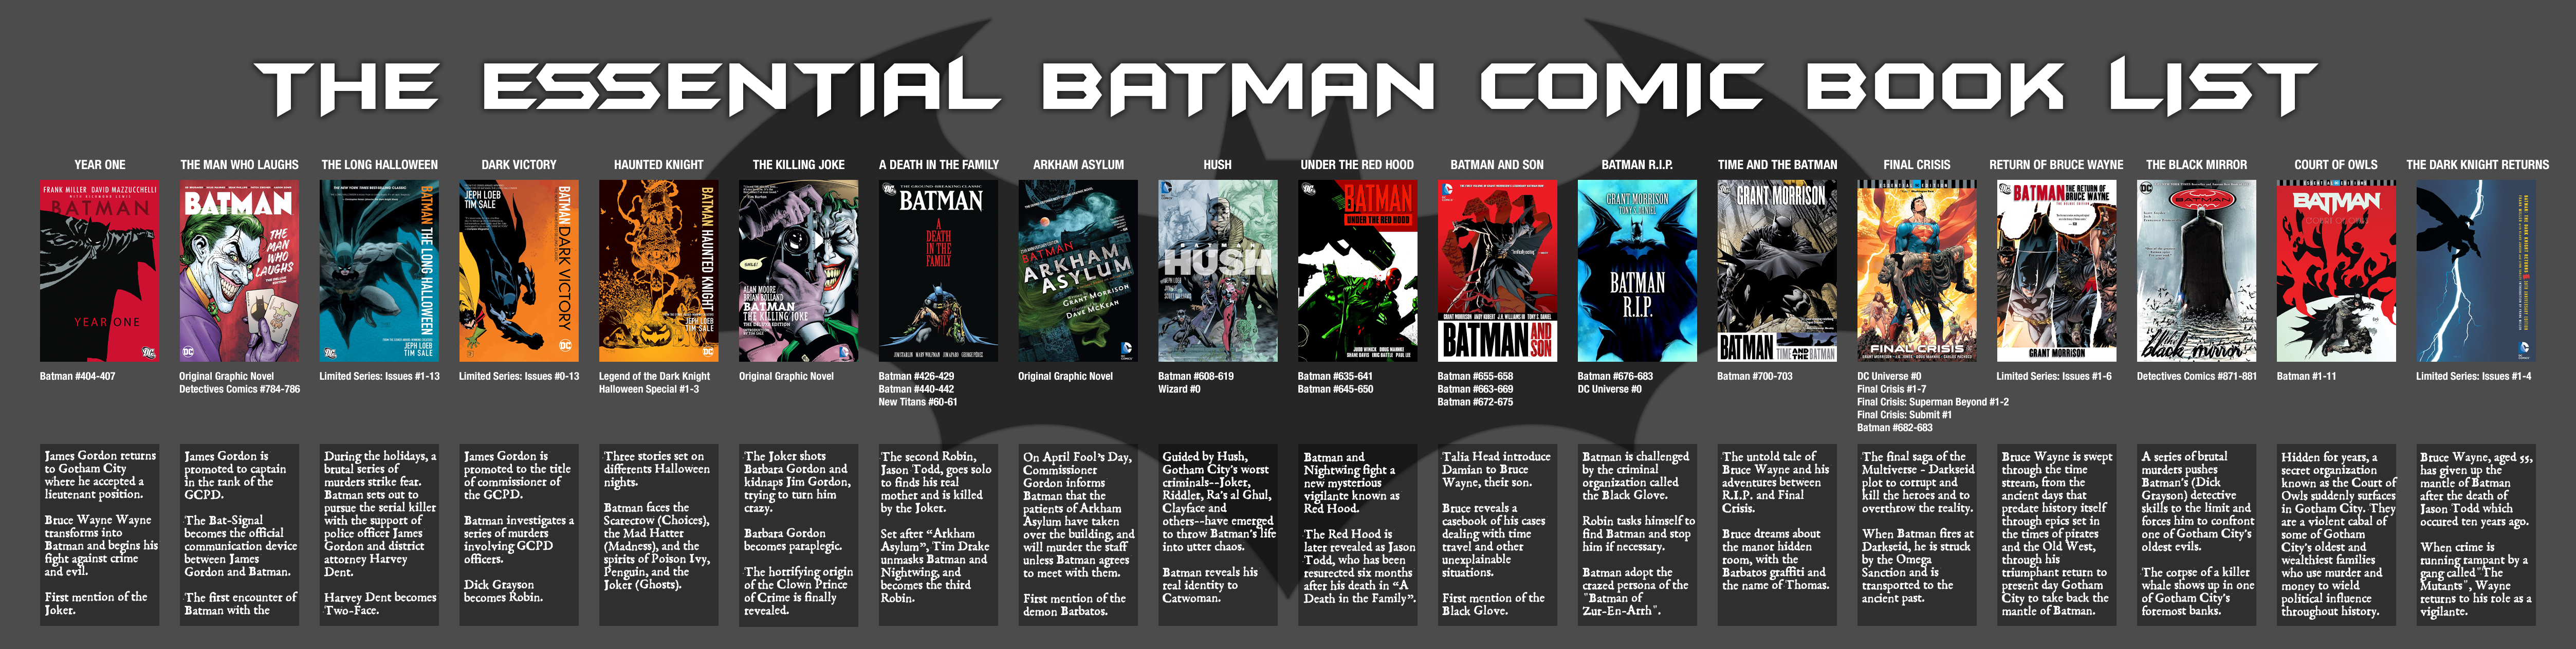 Timeline - The Essential Batman Comic Book List by Morsoth on DeviantArt